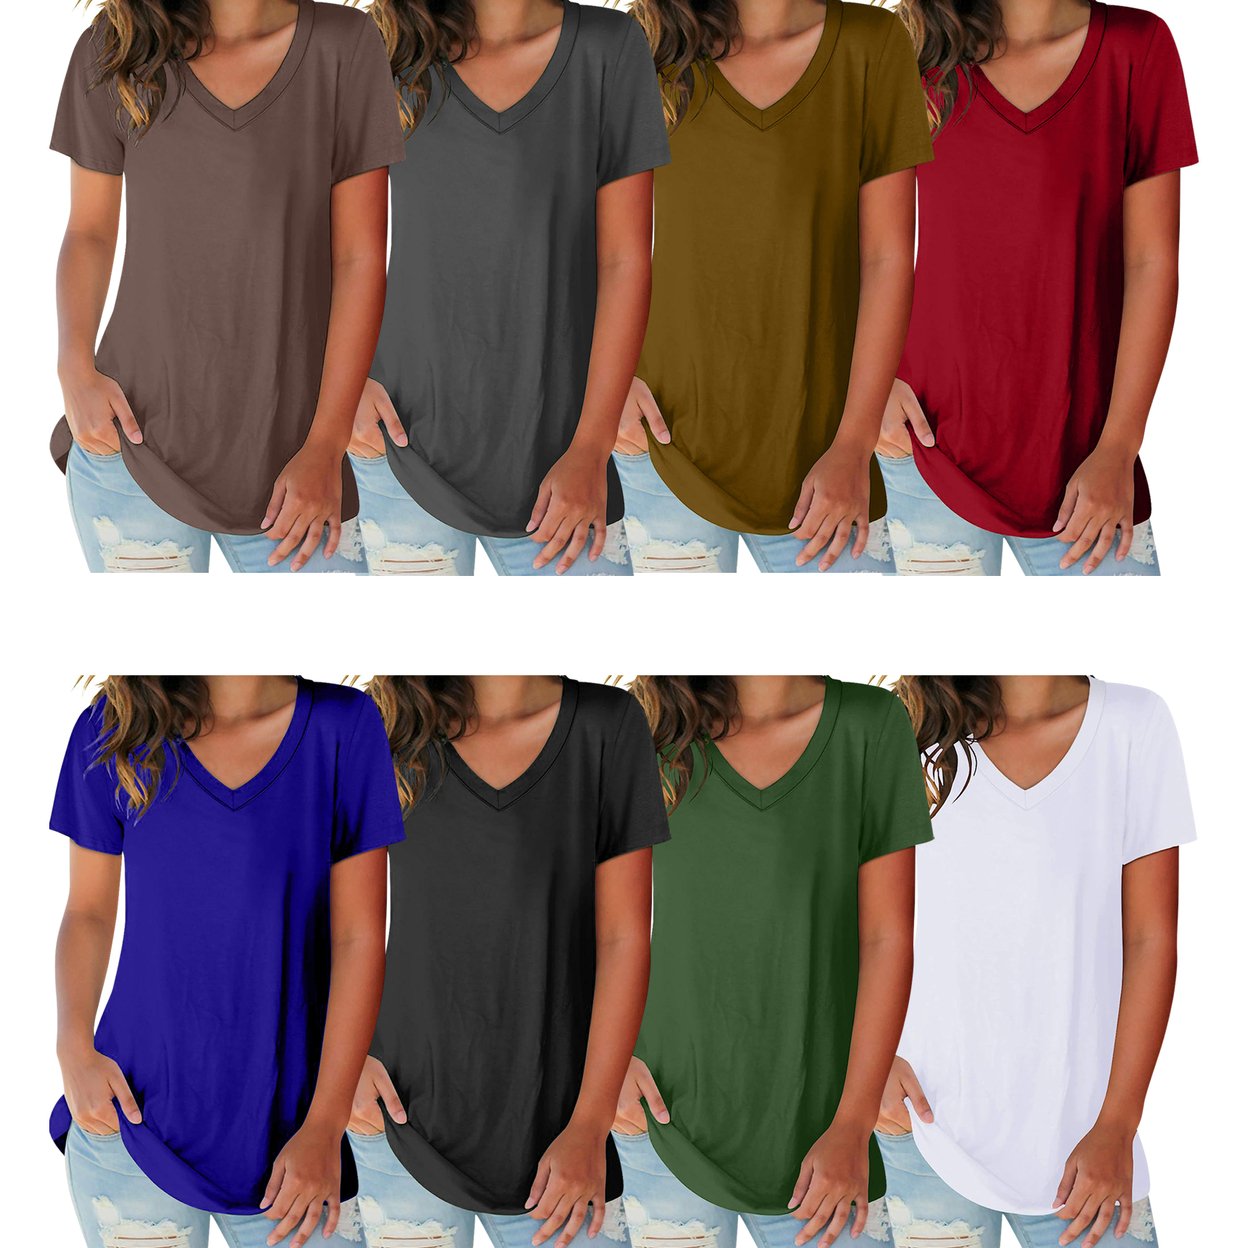 2-Pack: Women's Ultra Soft Smooth Cotton Blend Basic V-Neck Short Sleeve Shirts - White & Red, Medium